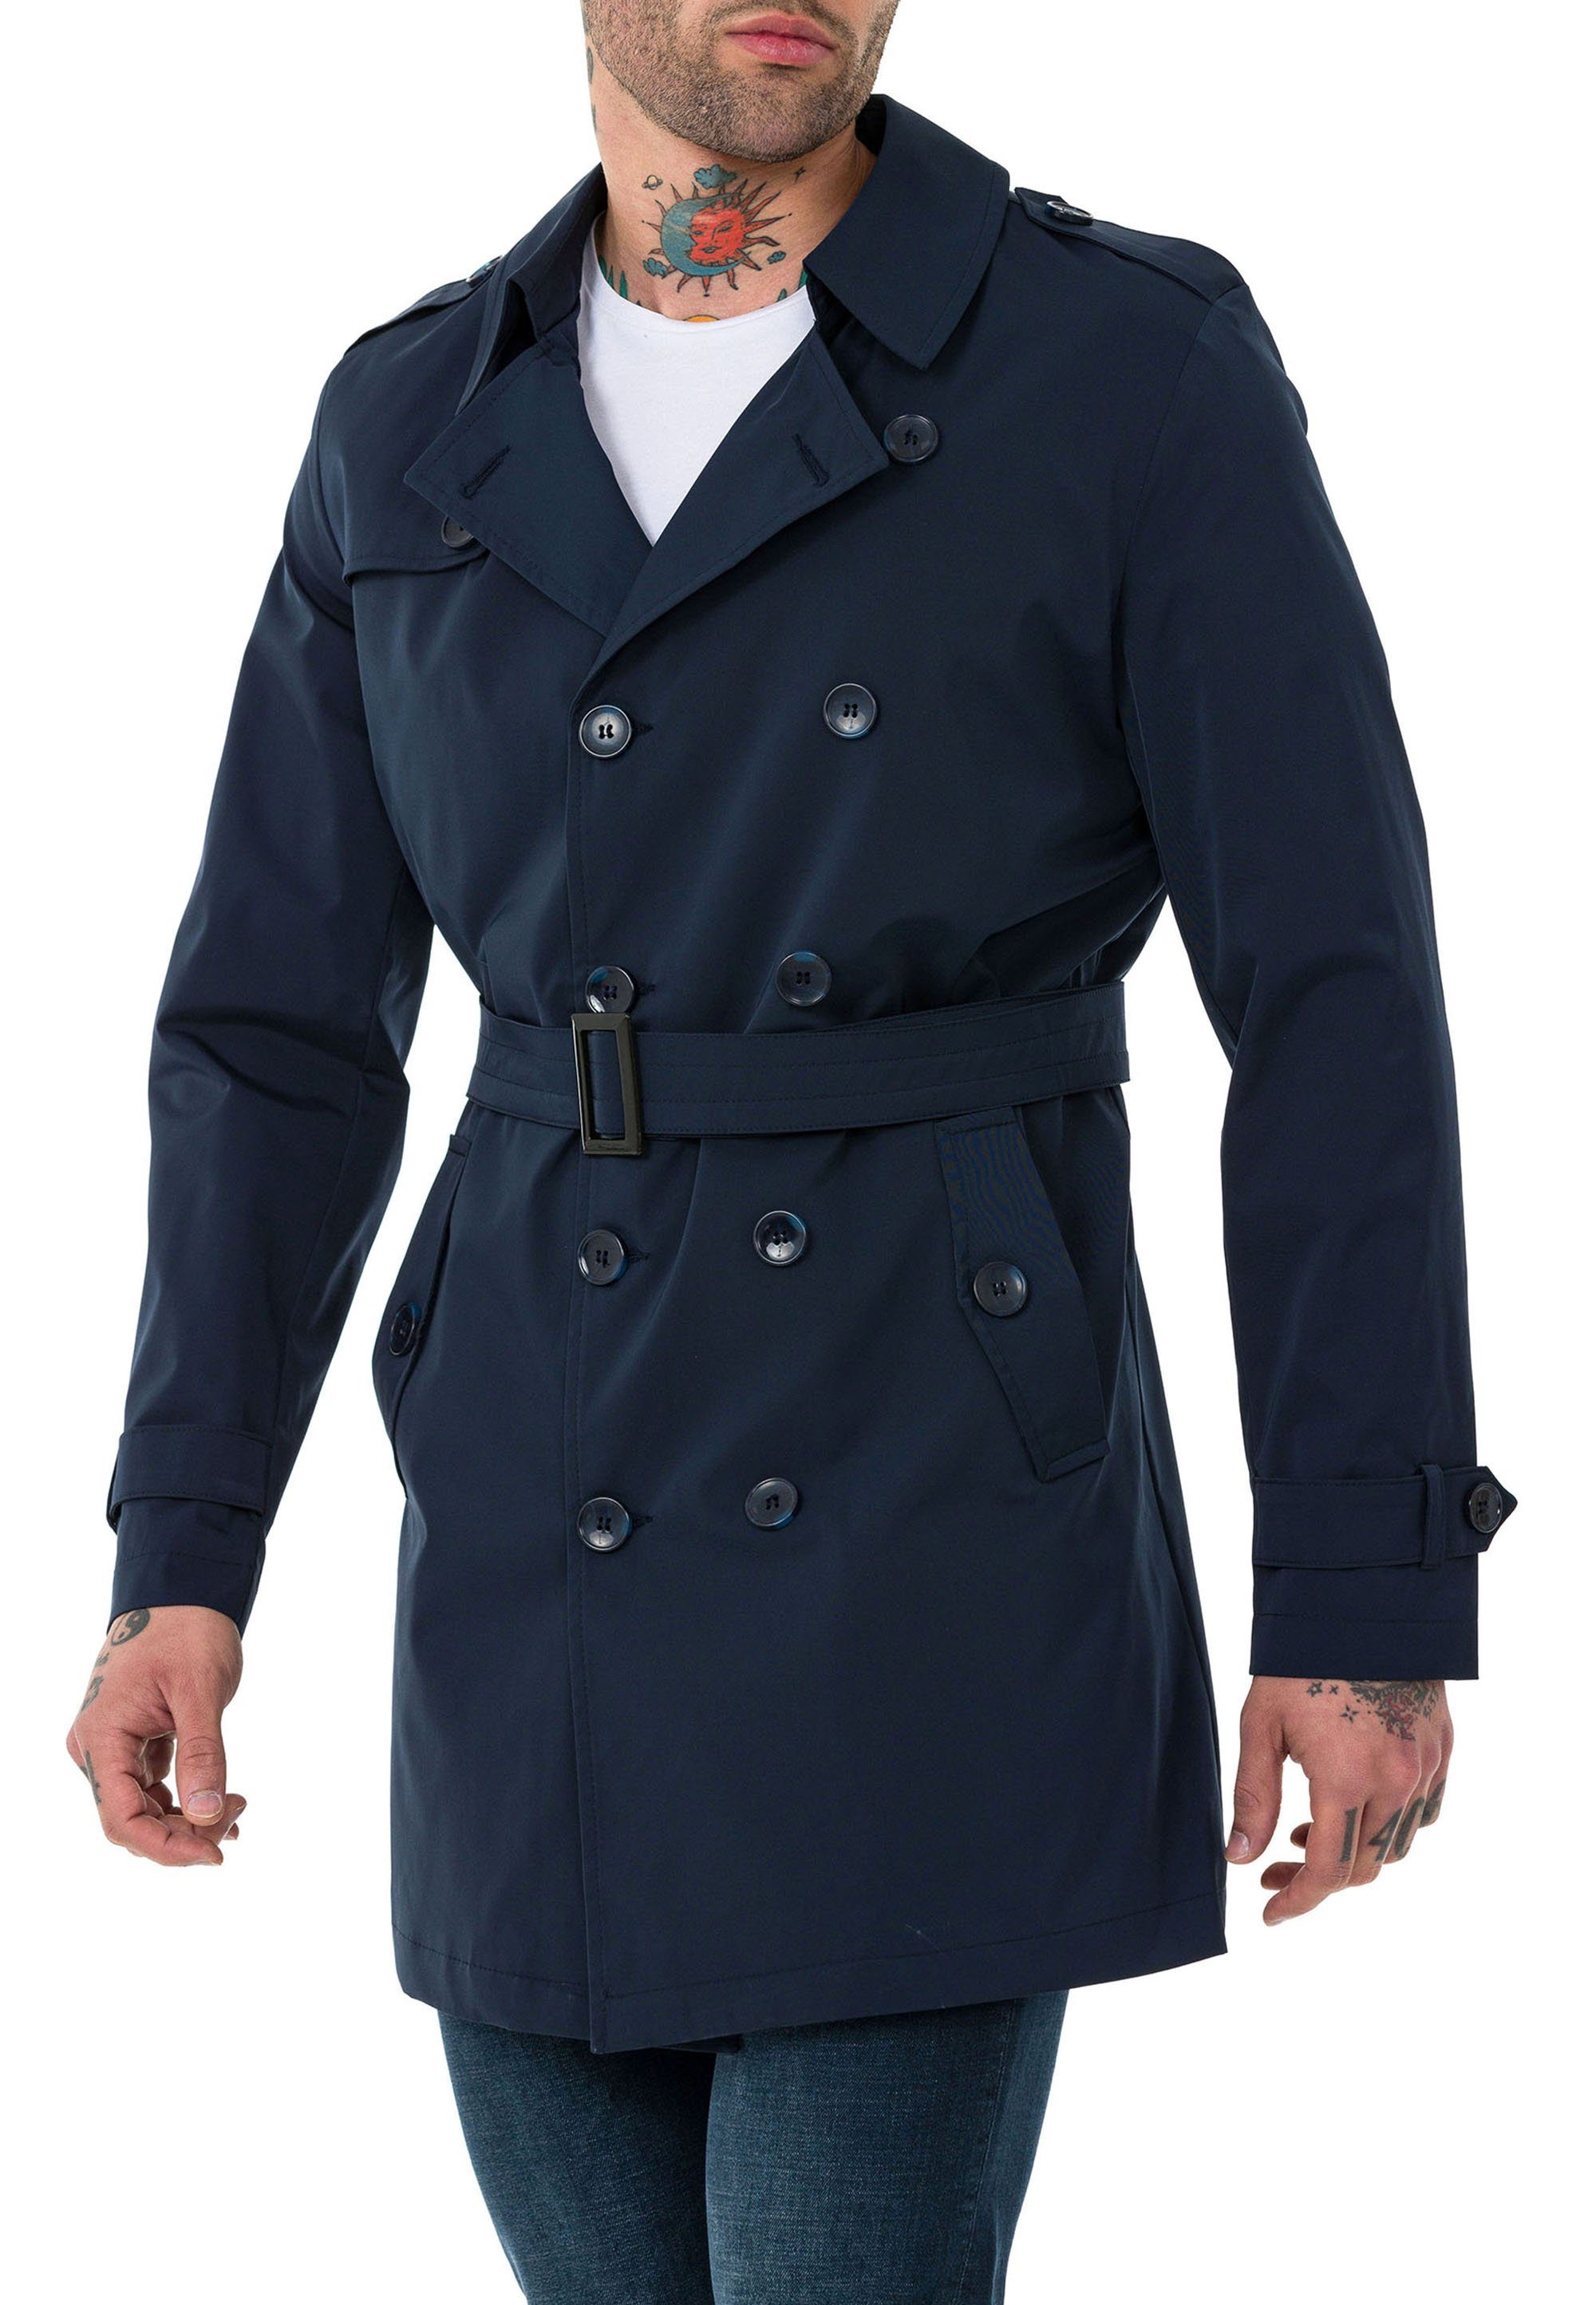 RedBridge Trenchcoat Red Bridge Herren Mantel Trenchcoat Jacke Light Version Navy Blau XL Premium Qualität